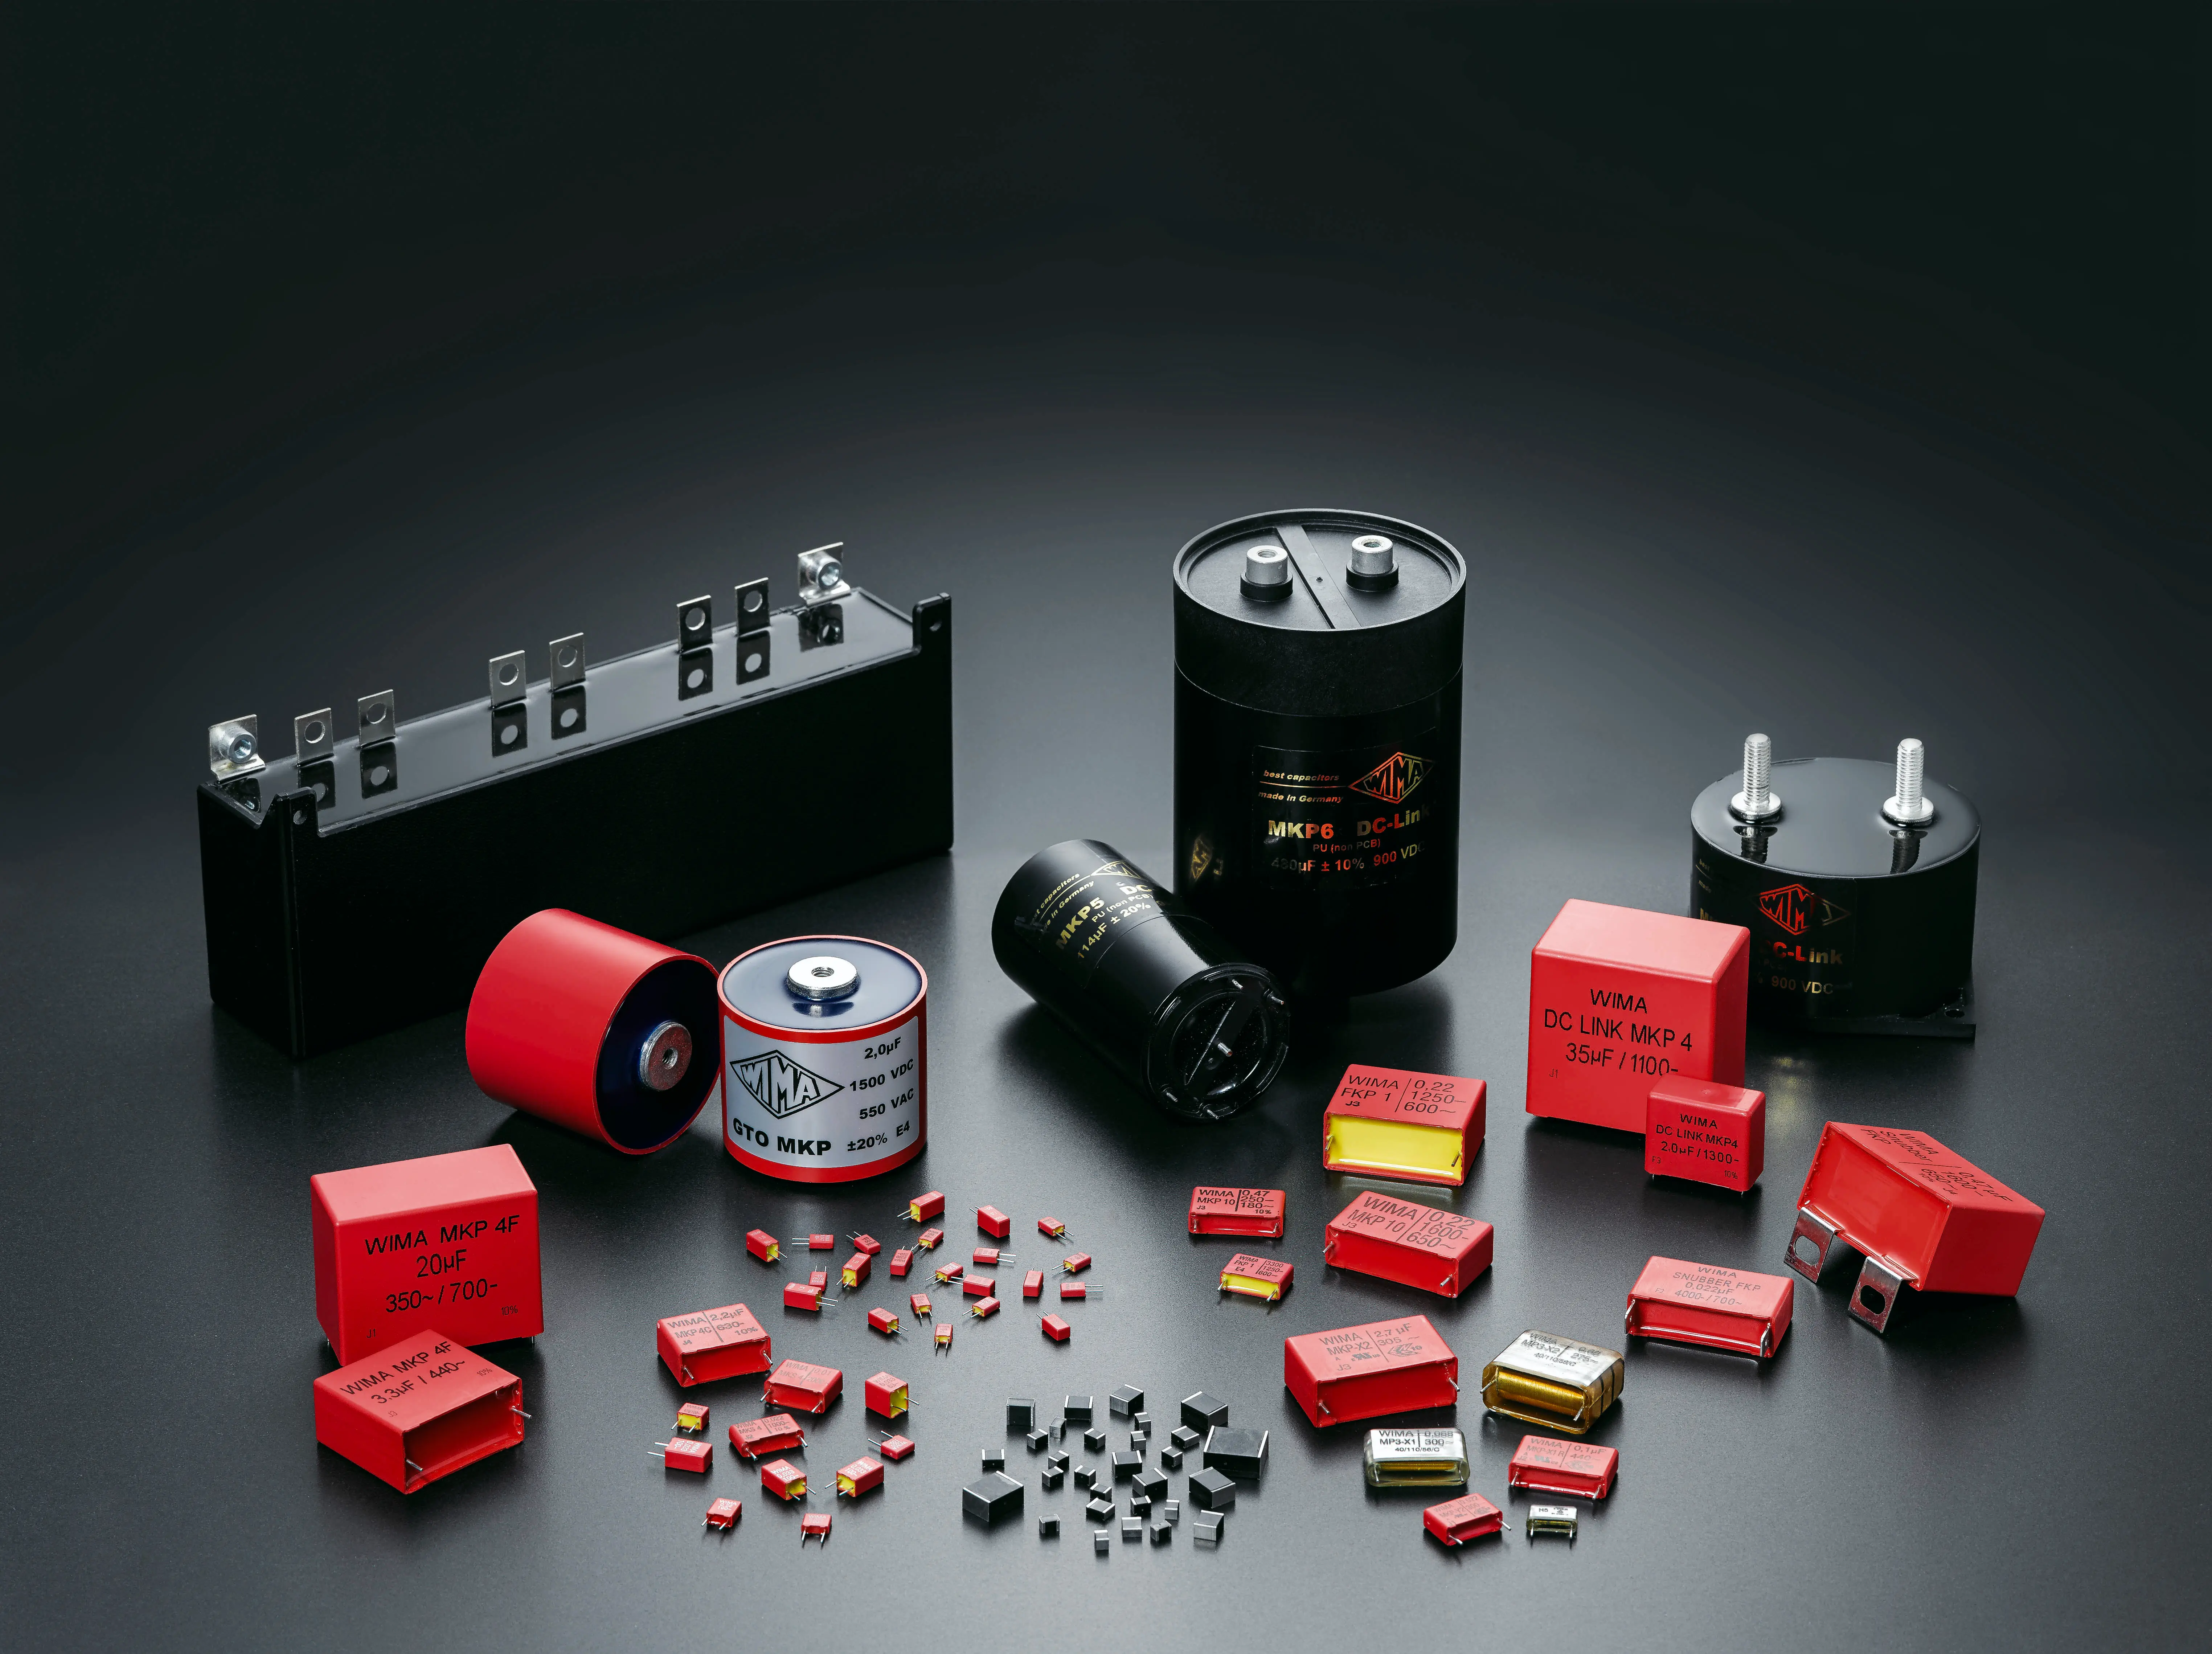  Film capacitors from WIMA